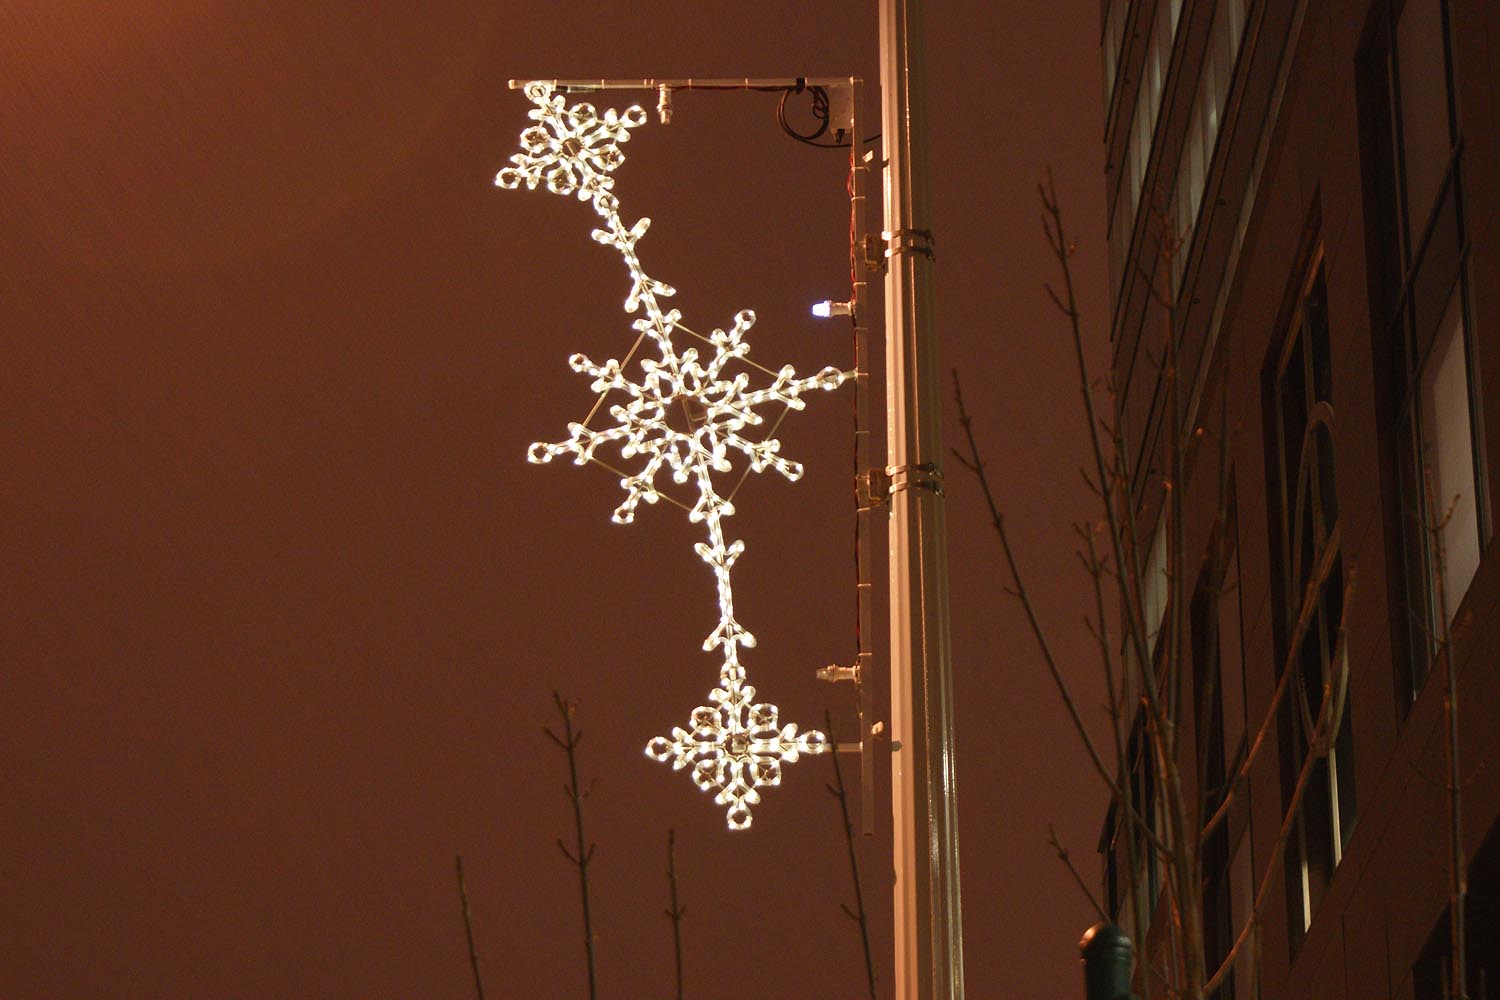 edmonton-downtown-business-association-polemount-snowflake